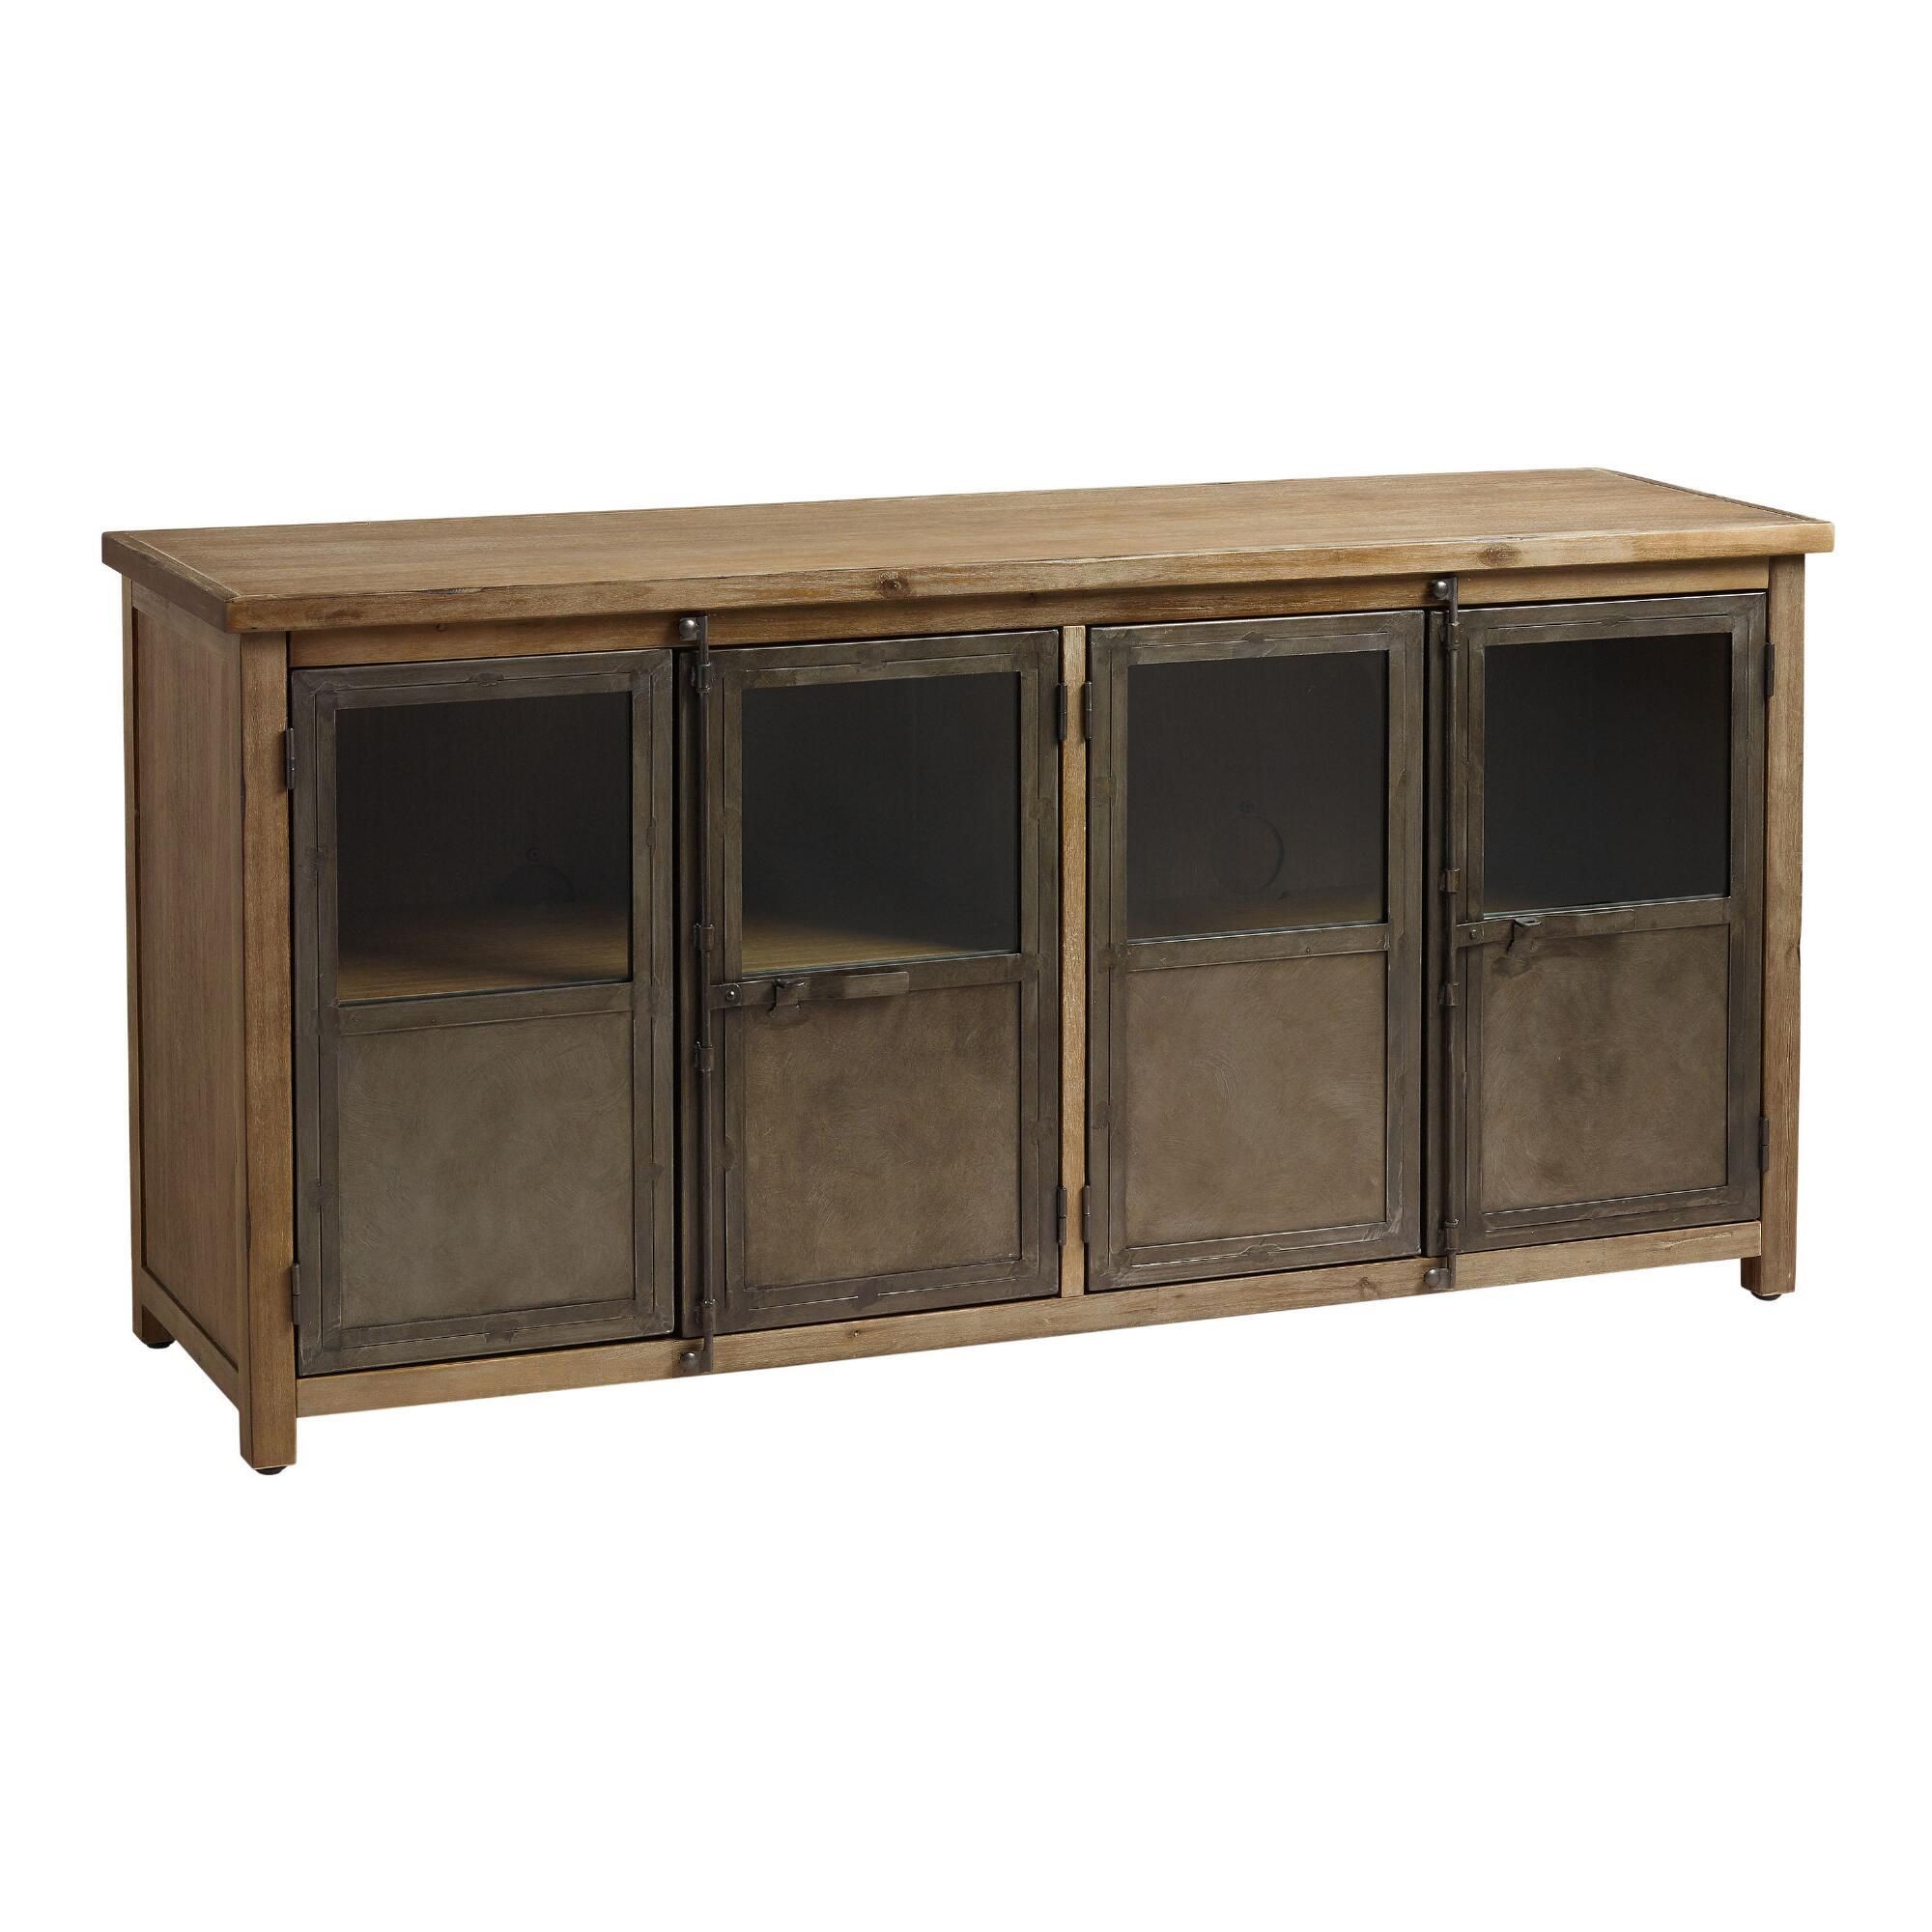 Langley Aged Latte Wood And Metal Storage Cabinet | World Market